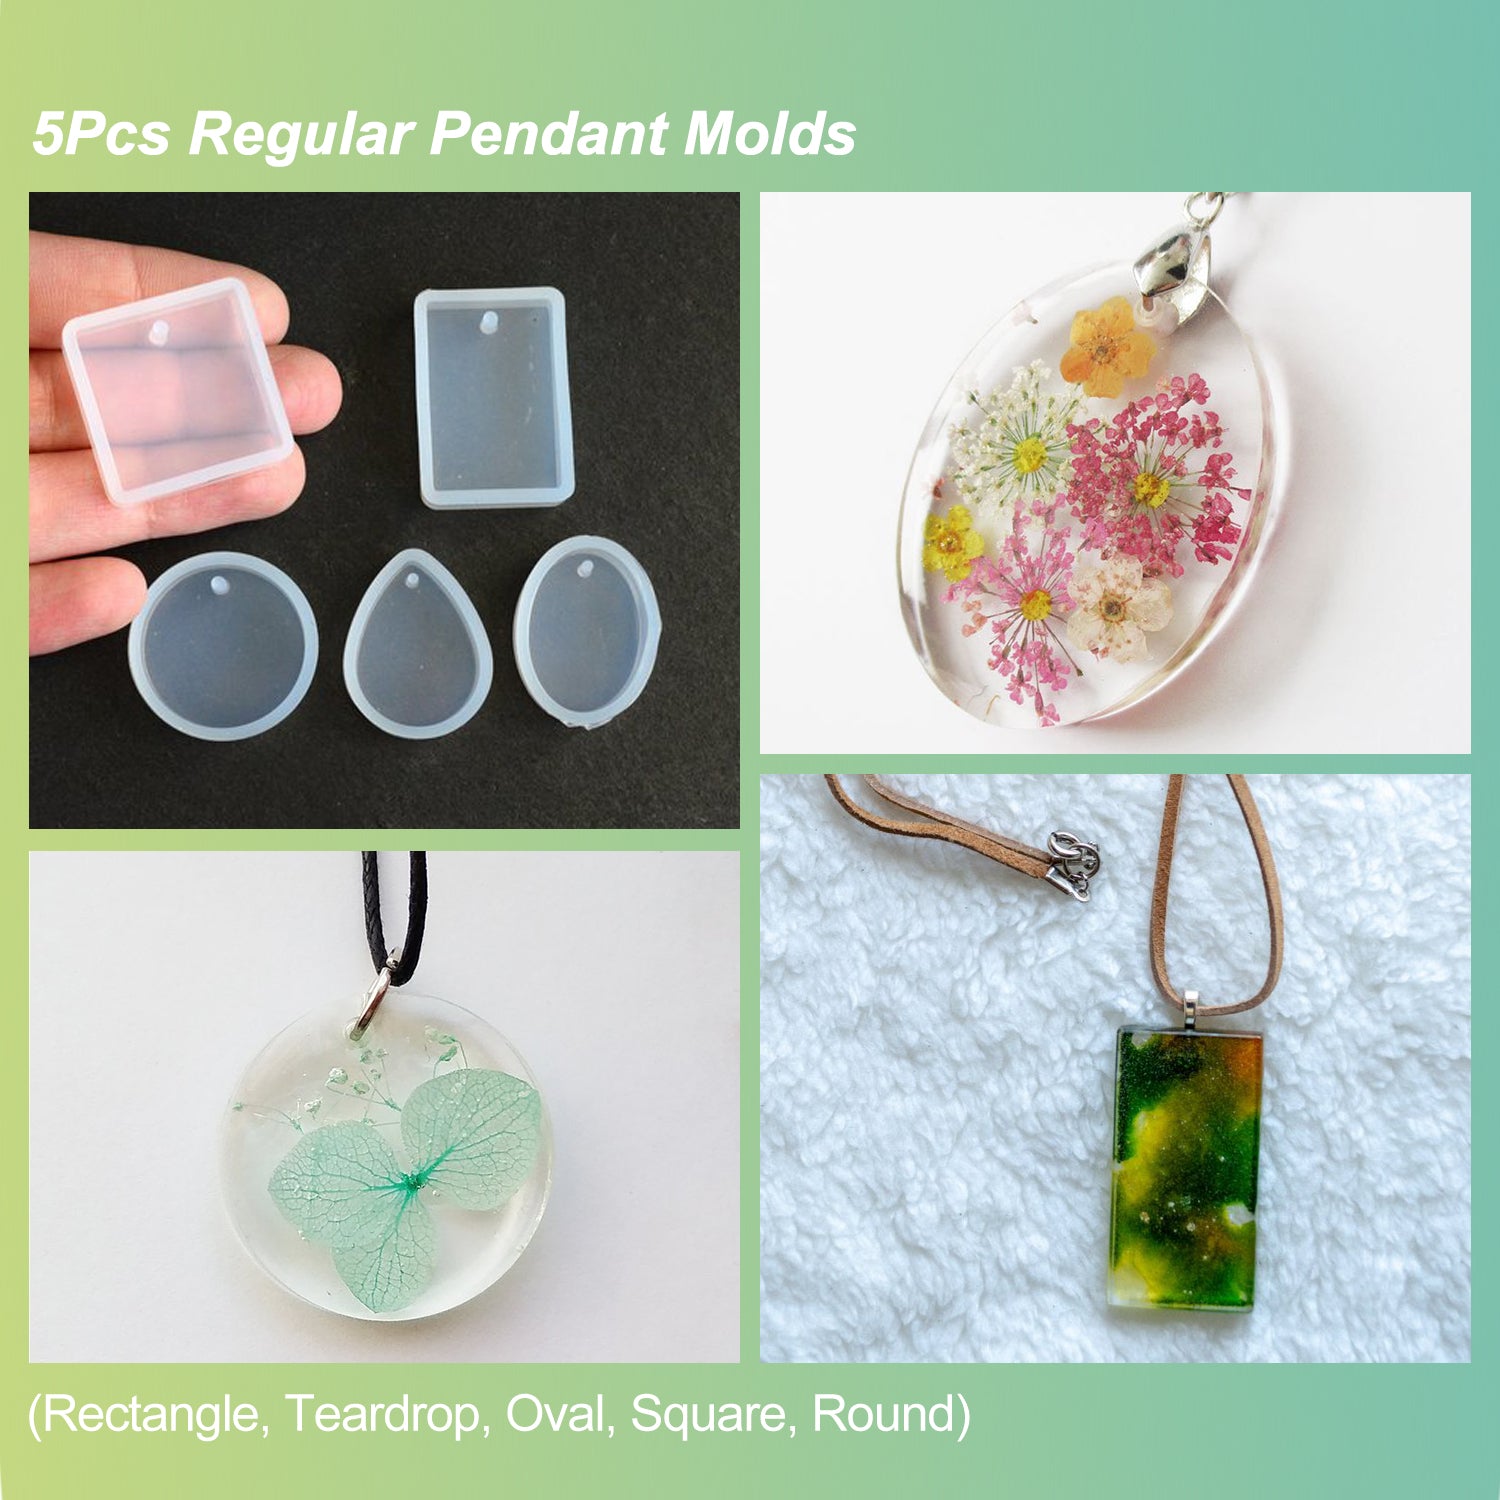 5pcs/set Pyramid Jewelry Casting Mold, Silicone Jewelry Mold Kits